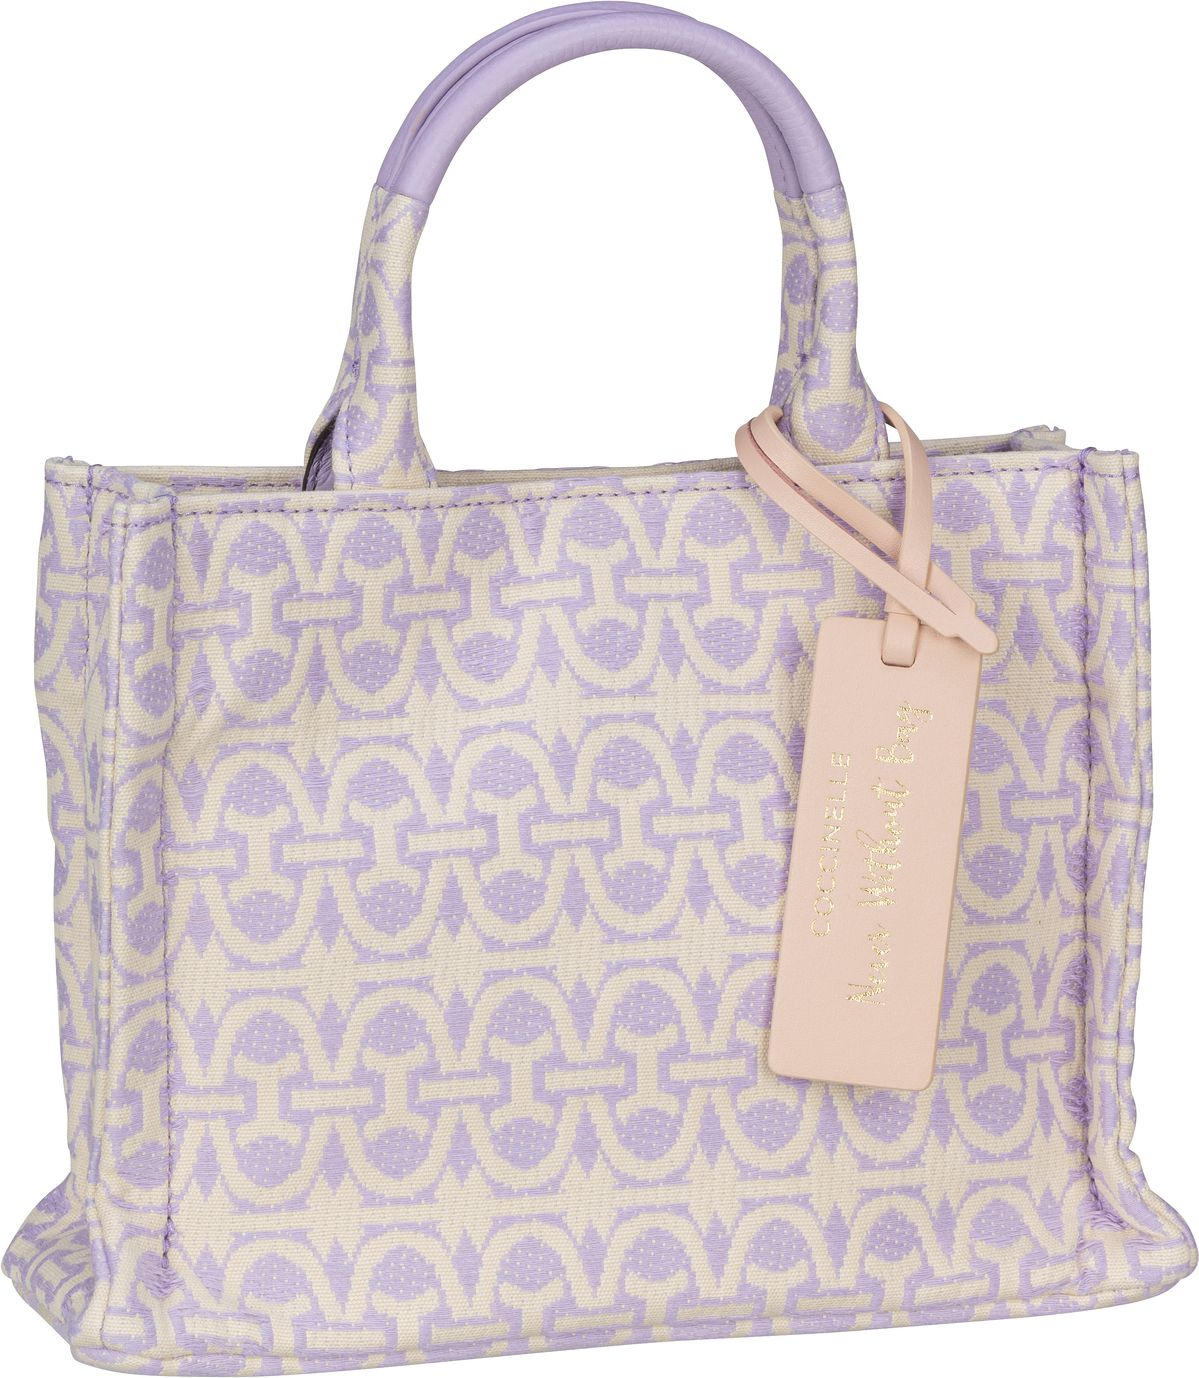 Coccinelle Never Without Bag 1803  in Violett (4.6 Liter), Handtasche